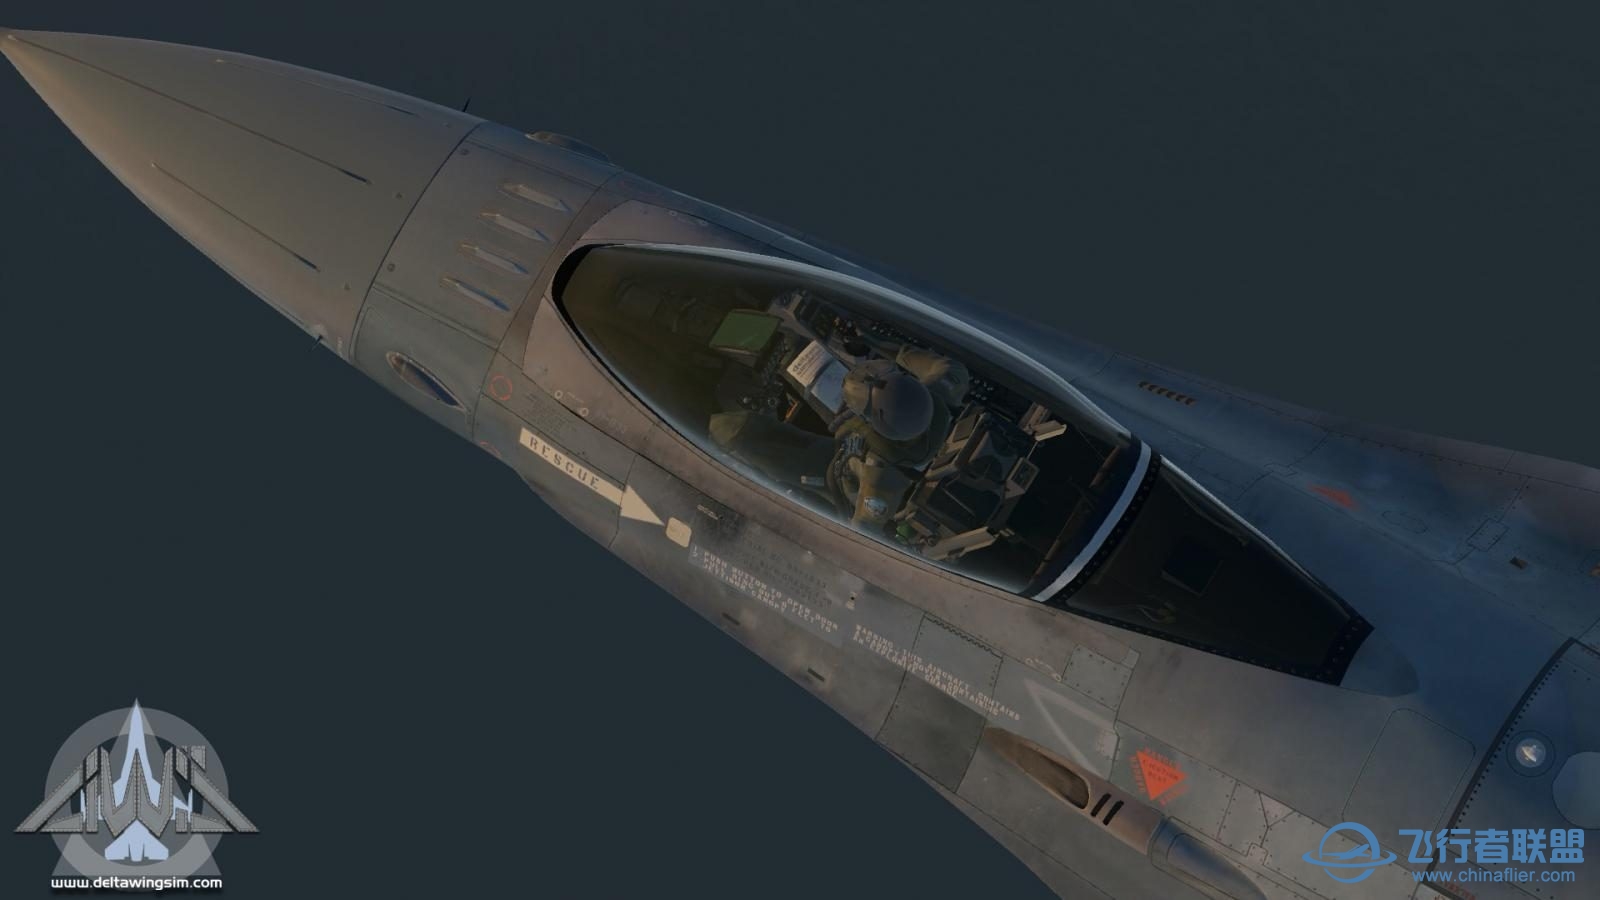 DeltaWing Simulations 发布 F-16C XPL-9762 